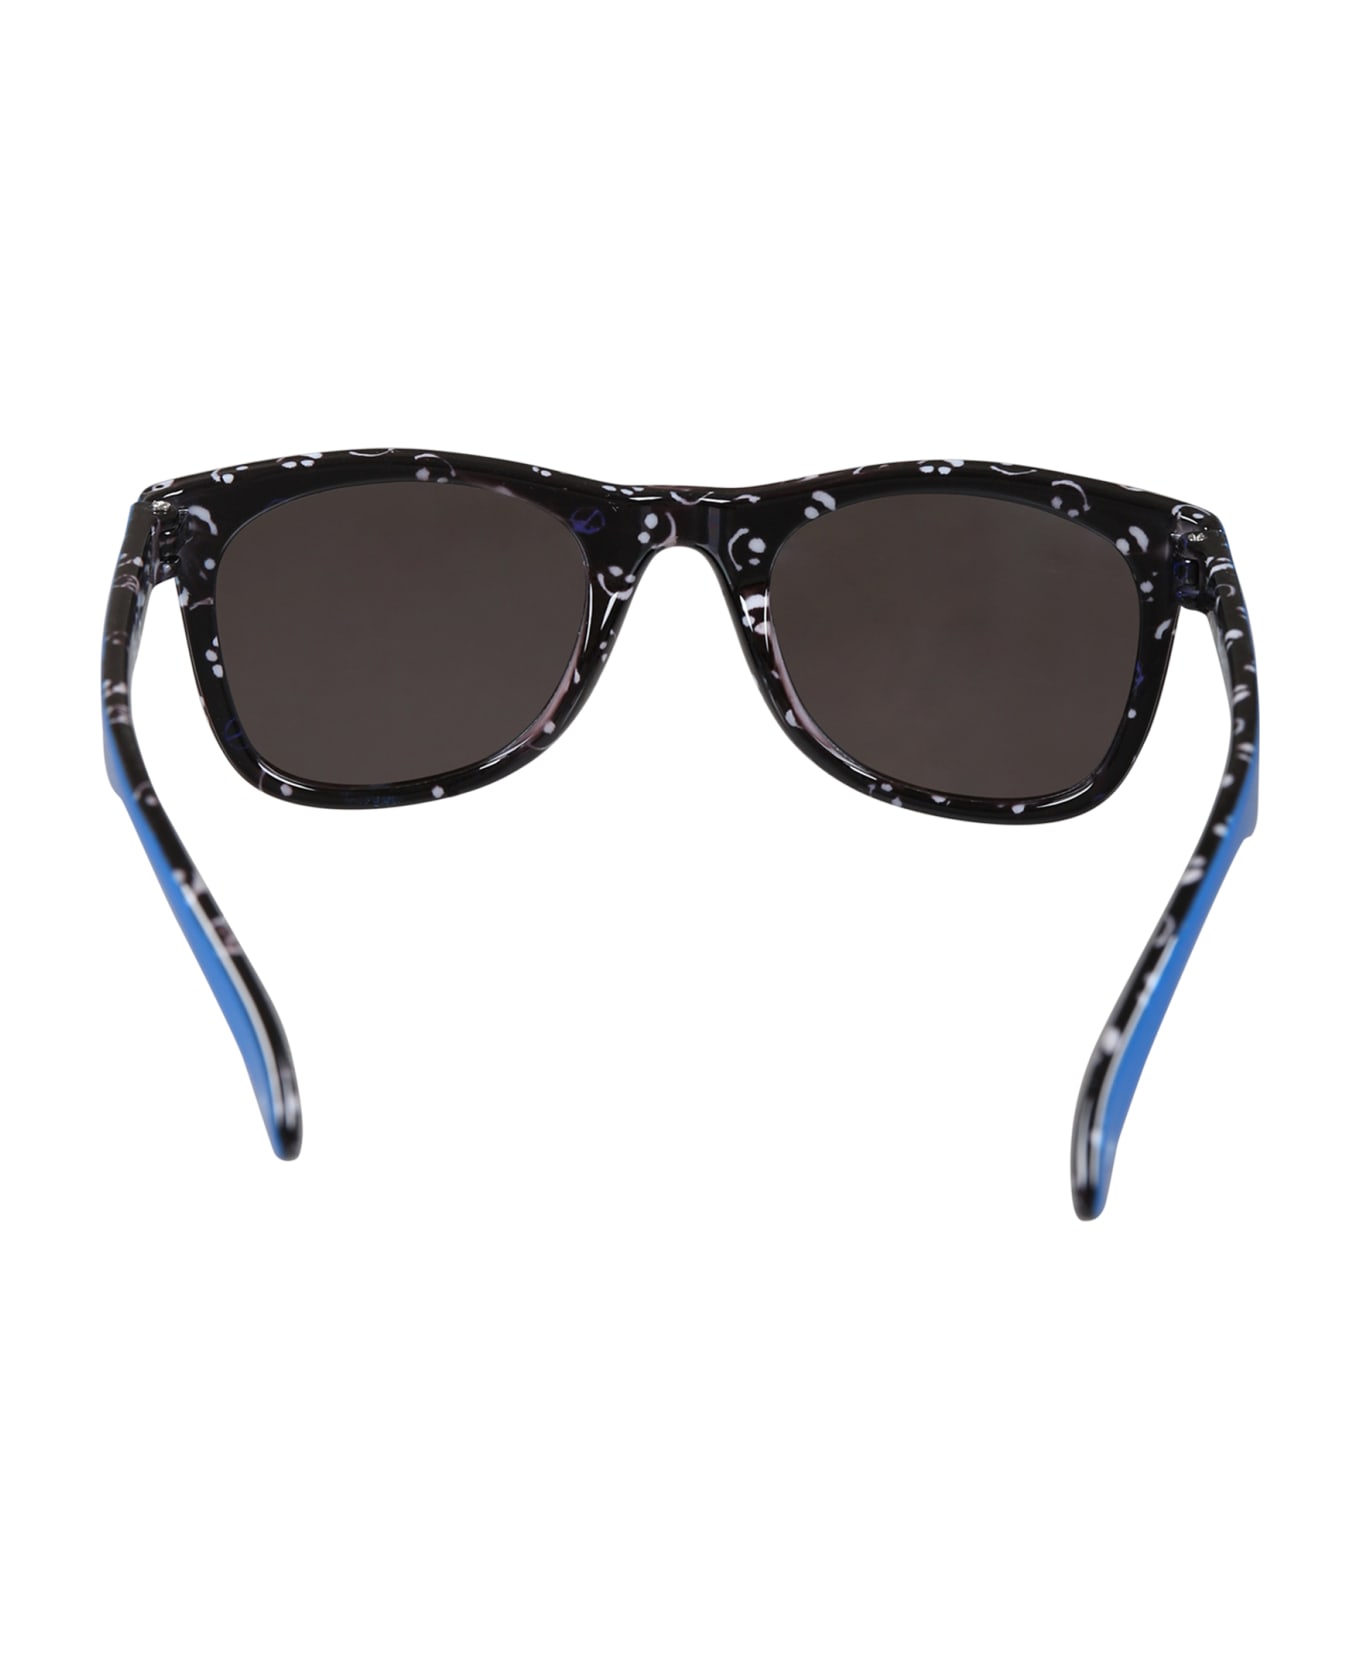 Molo Blue Smile Sunglasses For Boy - Blue